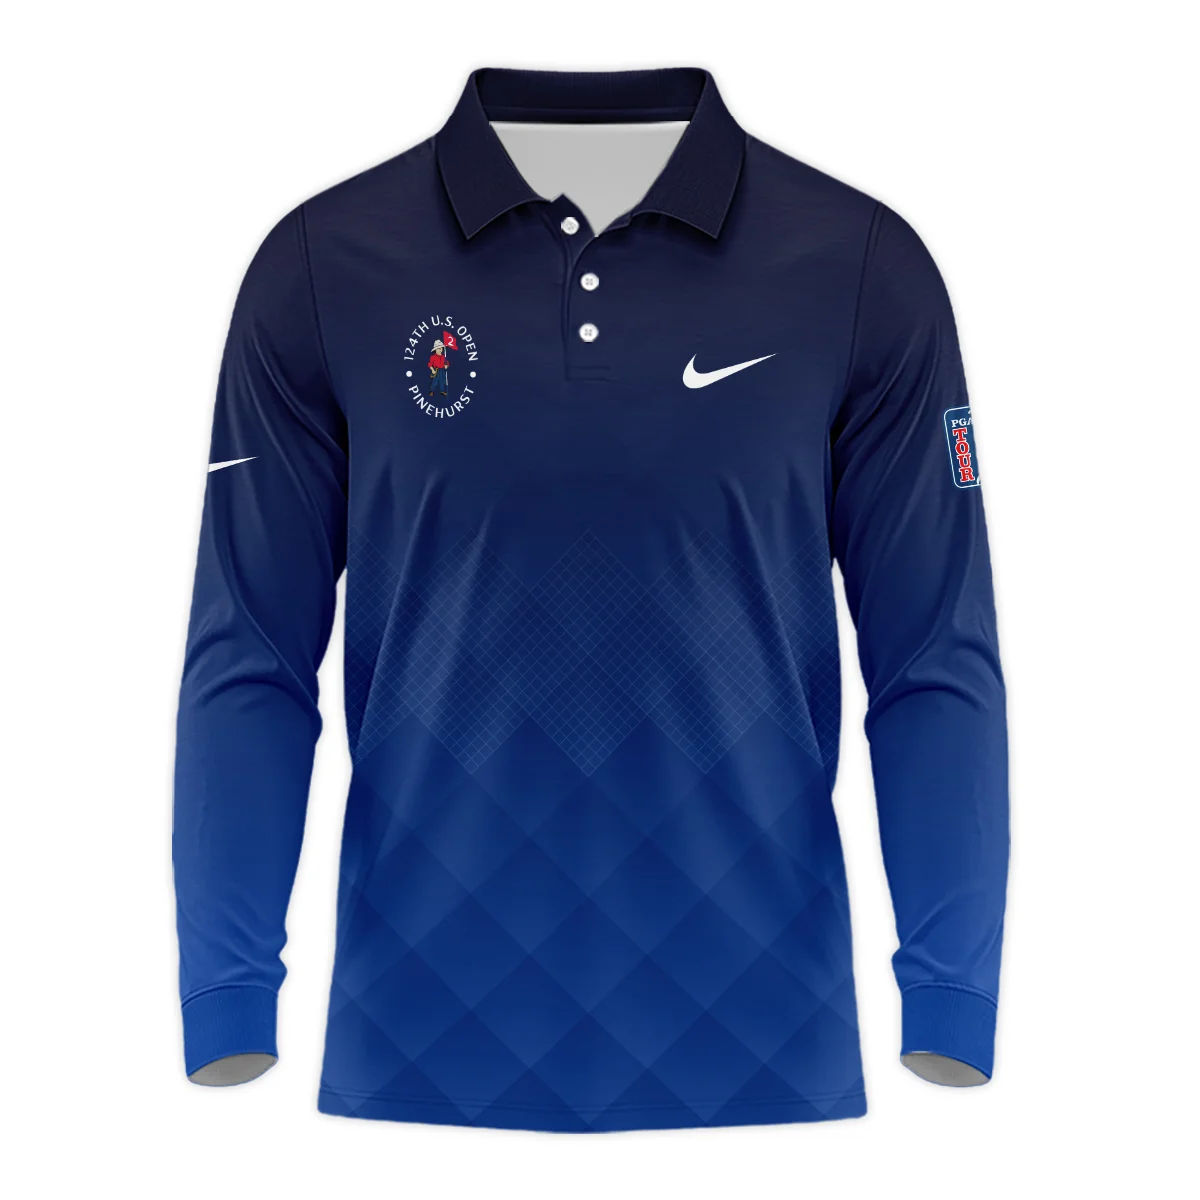 124th U.S. Open Pinehurst Nike Dark Blue Gradient Stripes Pattern Hoodie Shirt Style Classic Hoodie Shirt